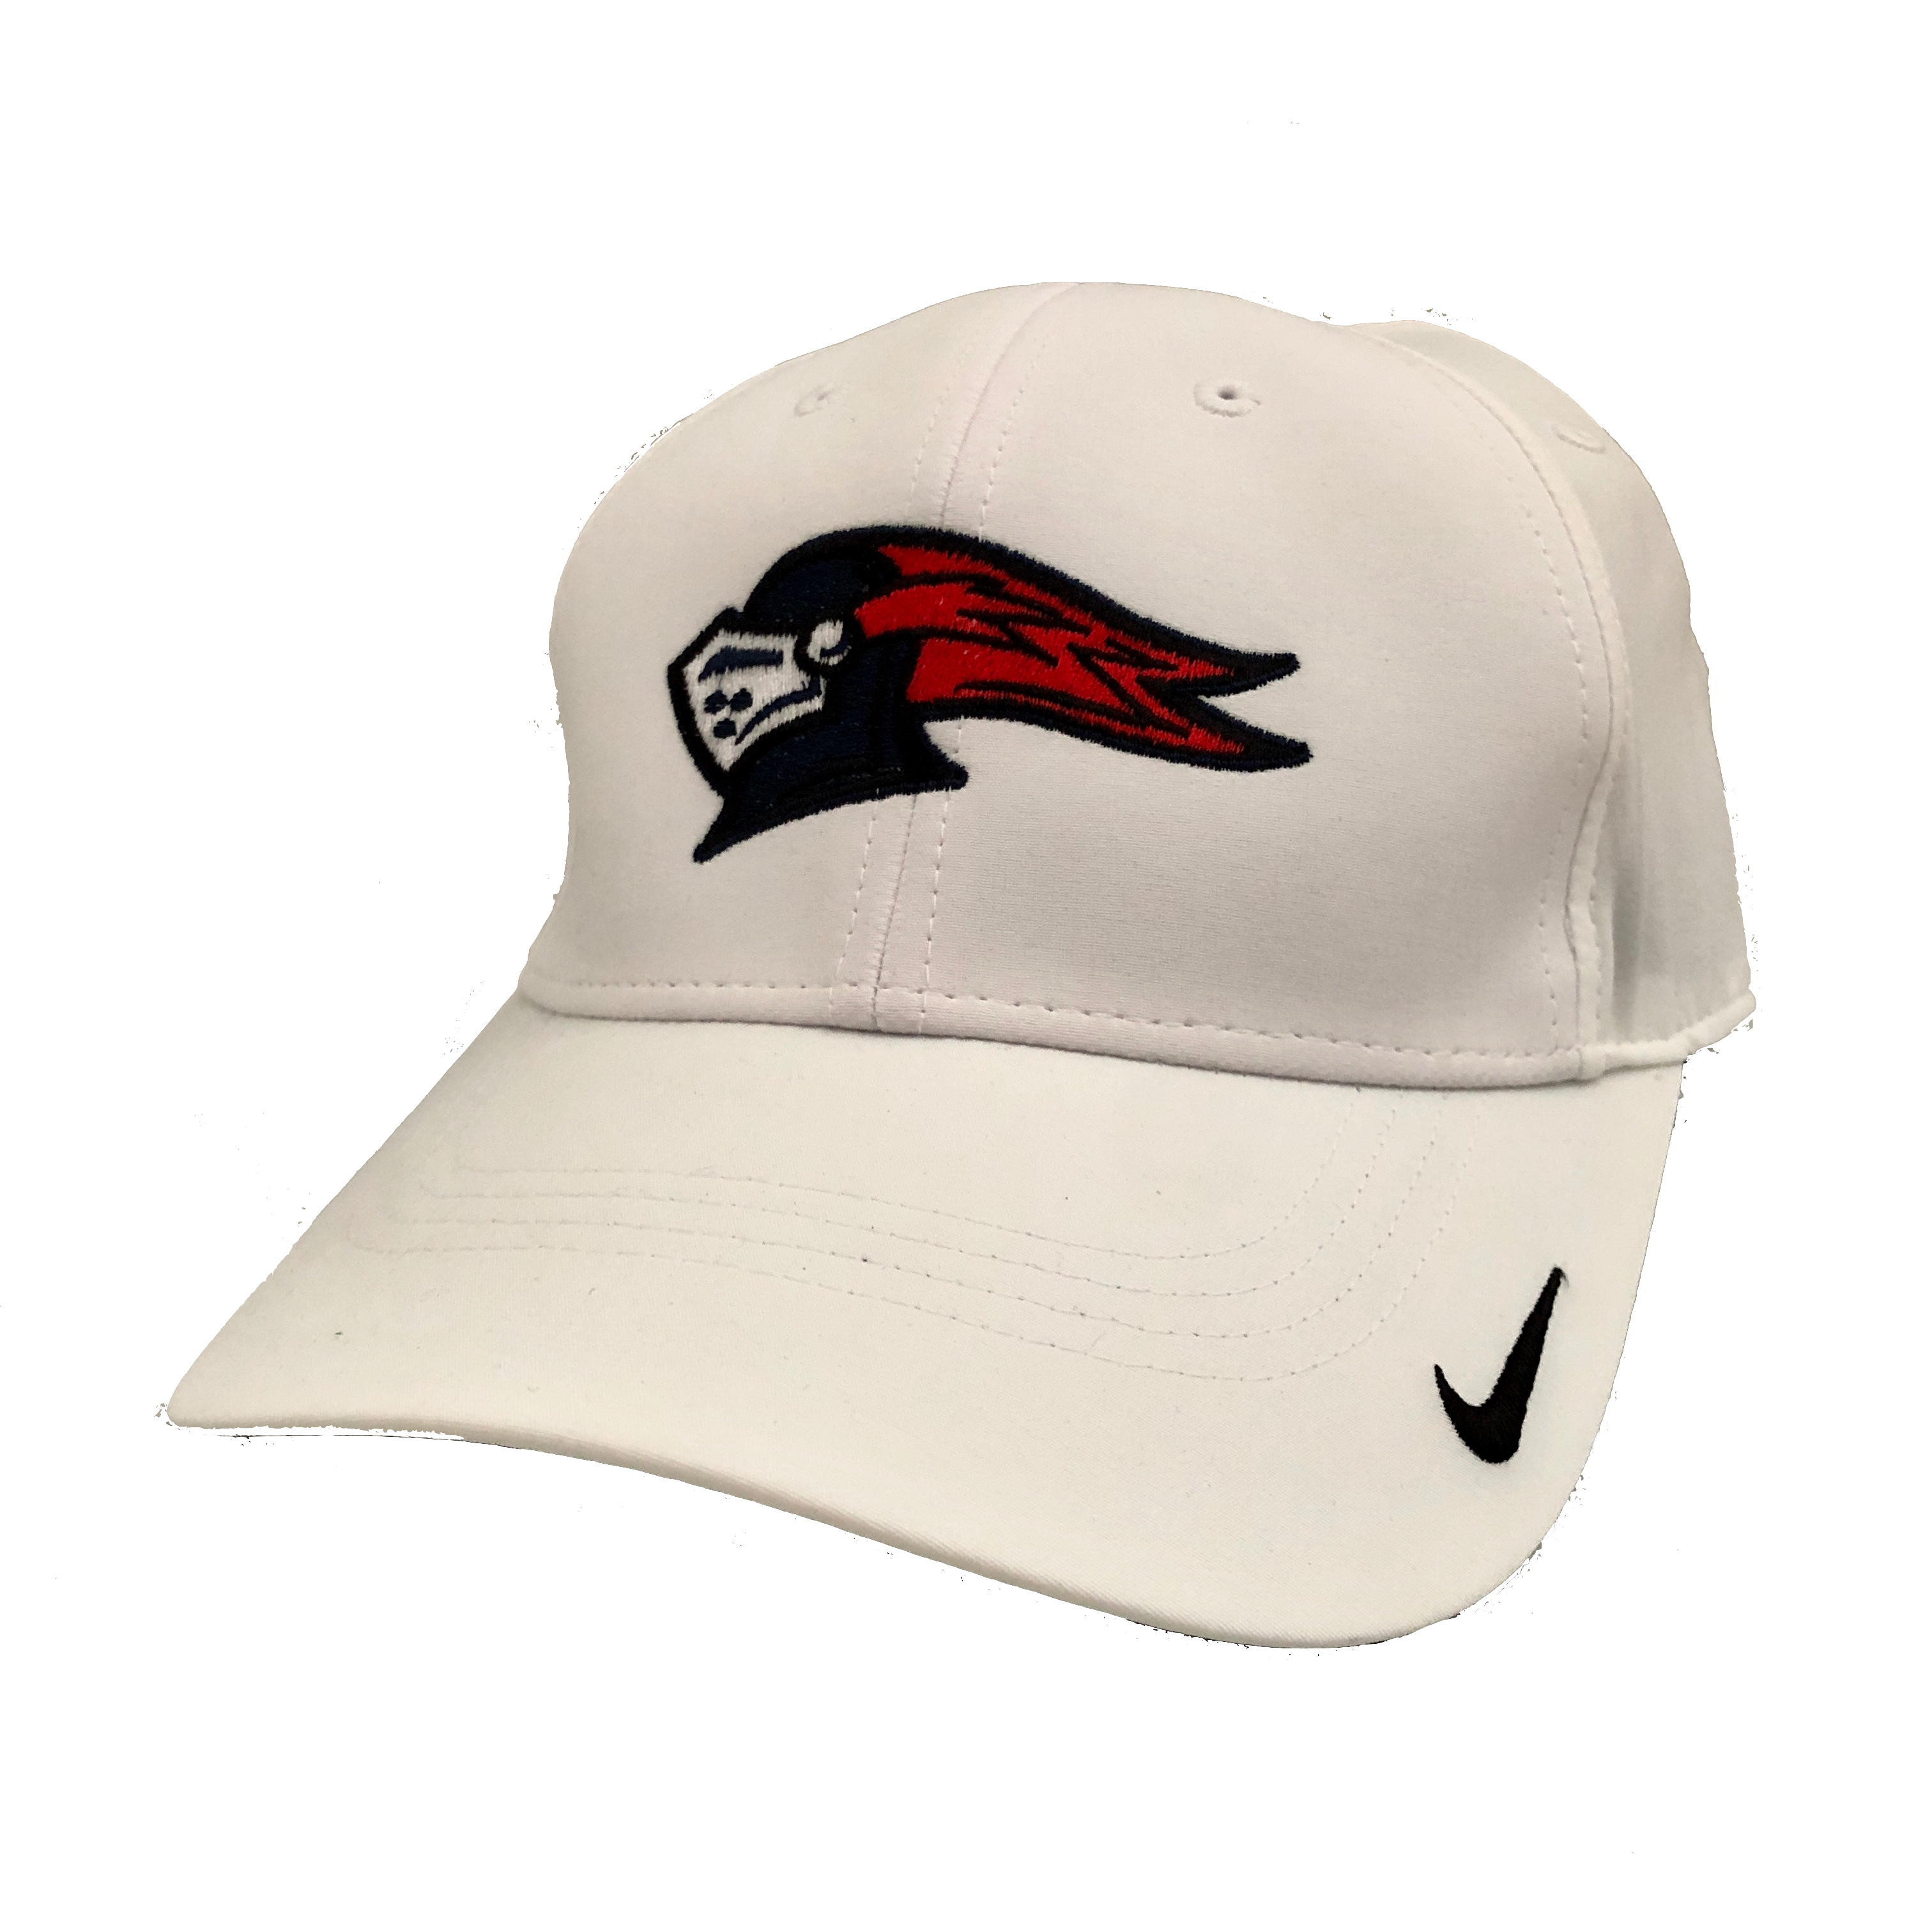 Nike Knight Head Adjustable White Cap